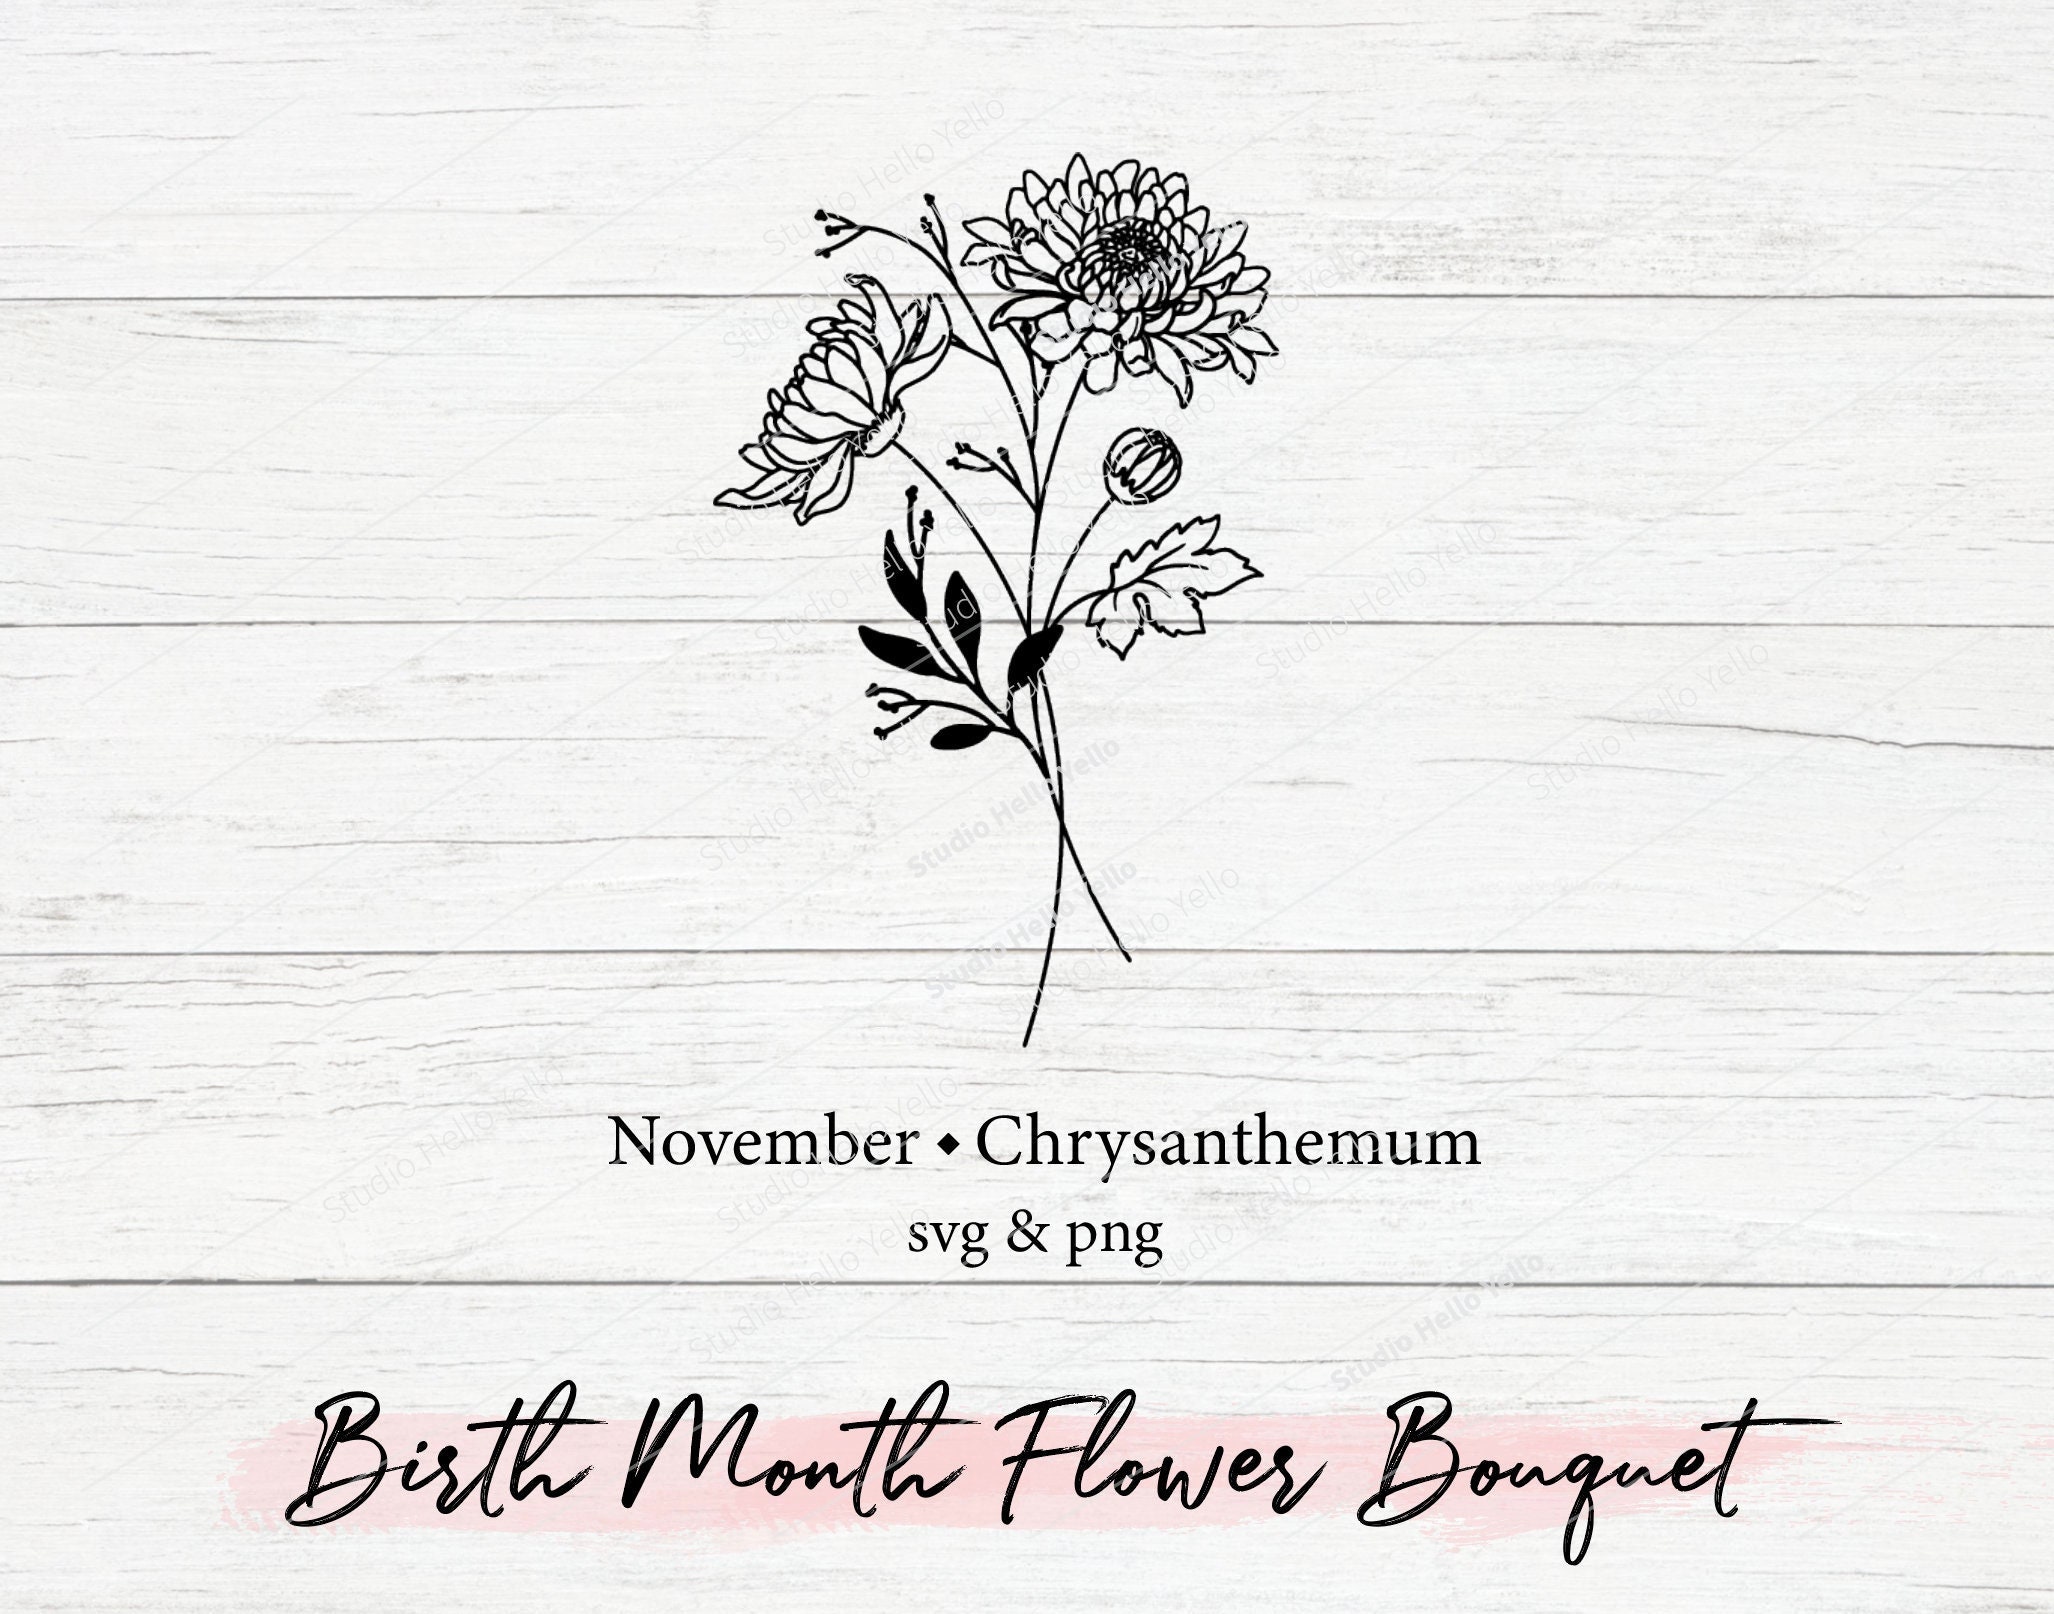 Chrysanthemum November Birthday Flower Original Watercolor  Etsy  Birth flower  tattoos Flower painting Birth month flowers